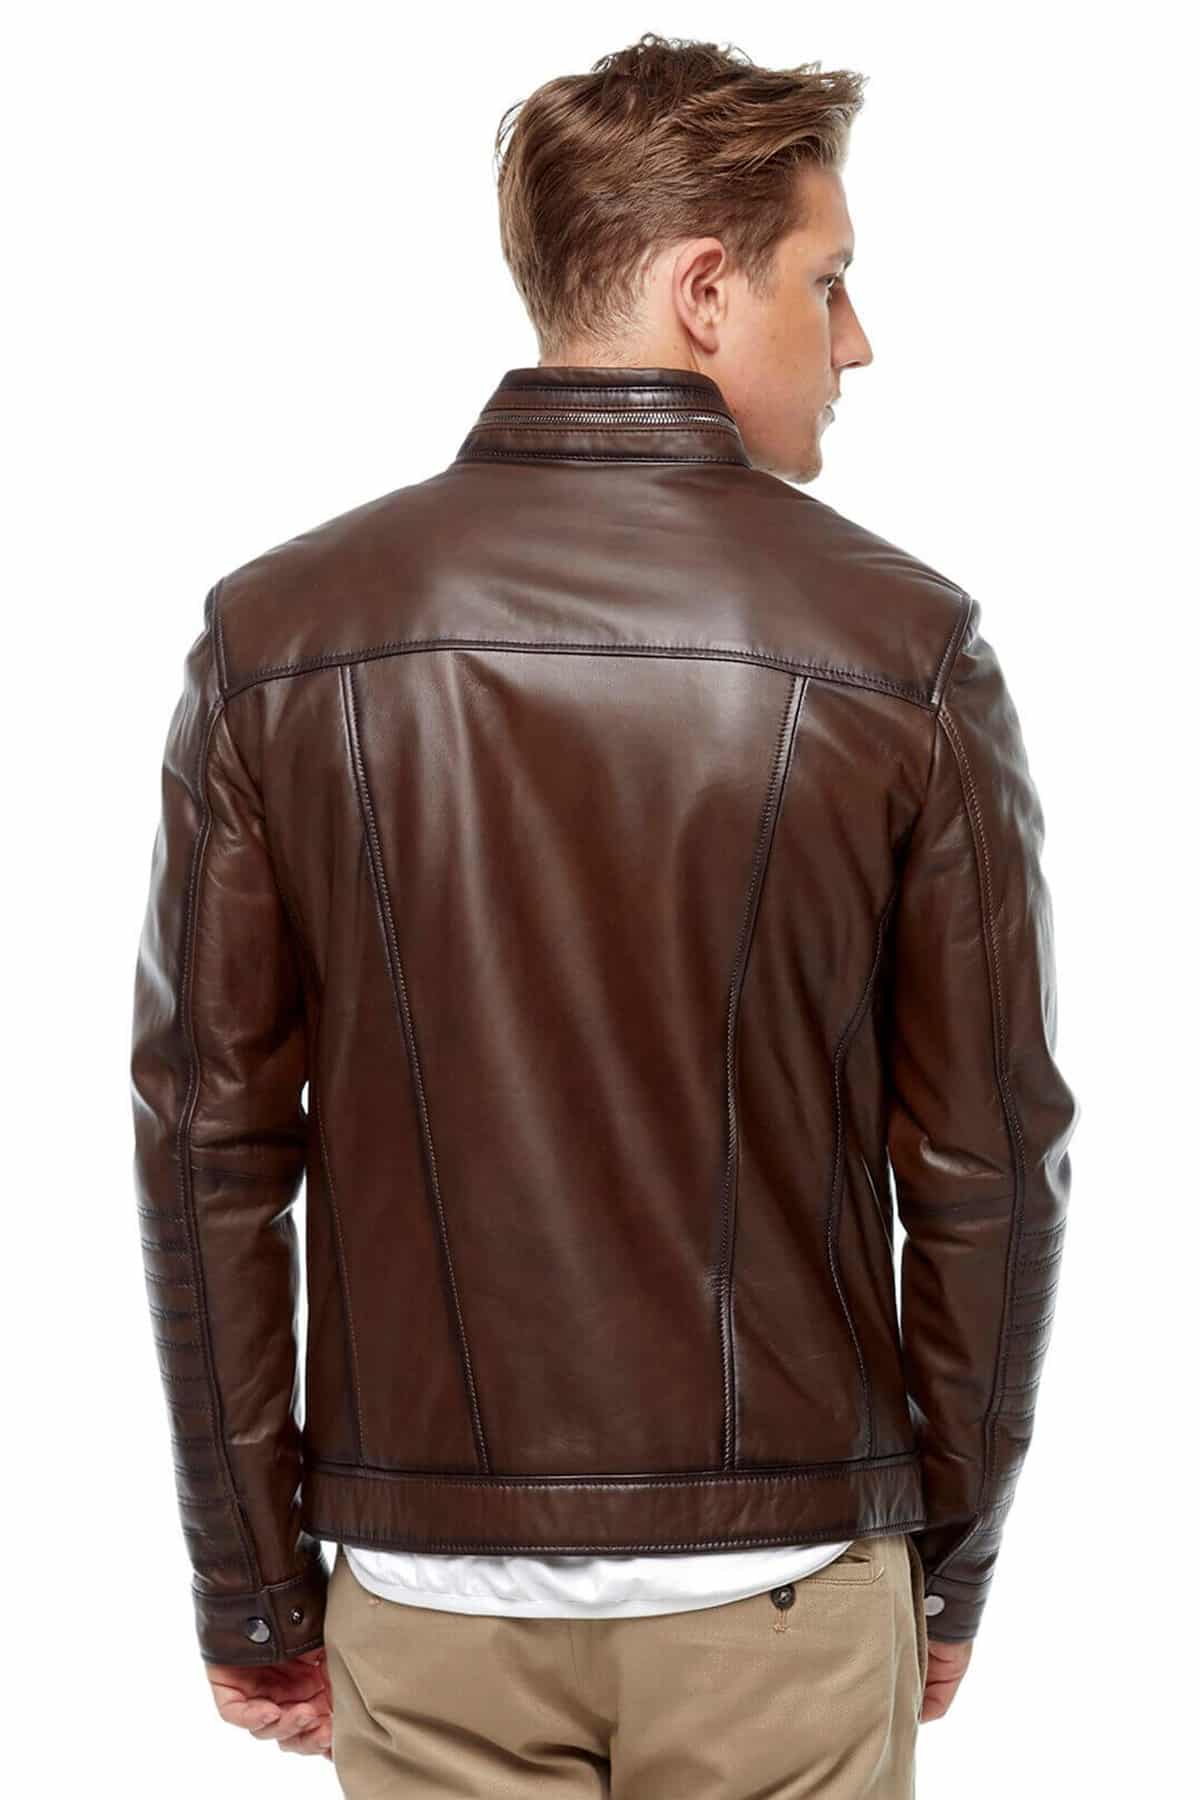 Blackout Brown Mens Leather Fashion Jacket2